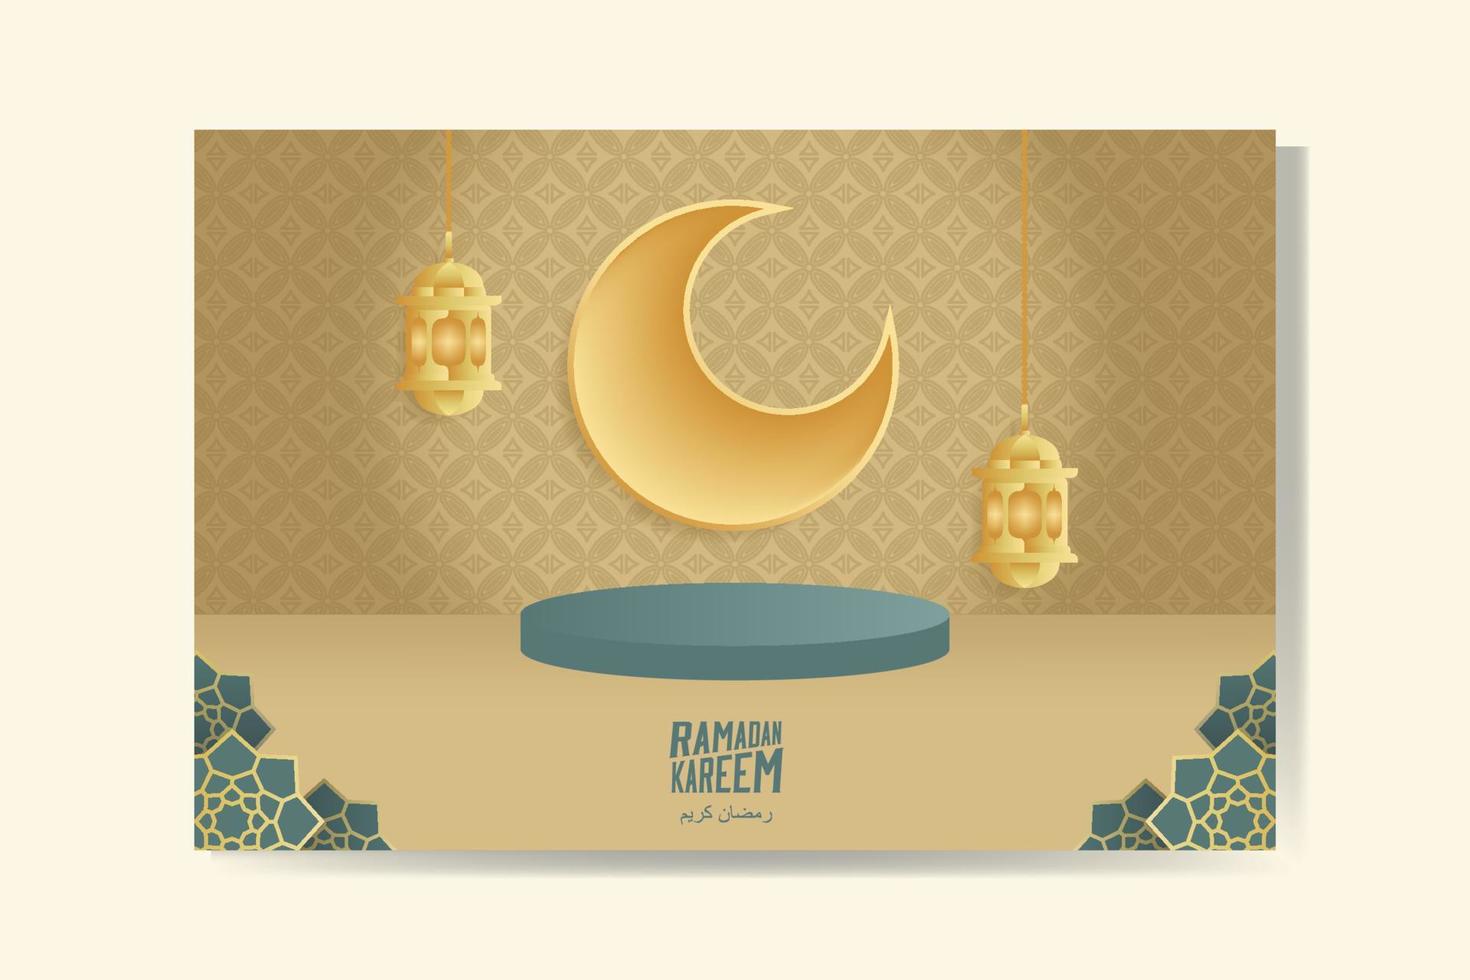 Ramadan Kareem greeting card with gold crescent moon and lantern Ramadan Mubarak. Background vector illustration.